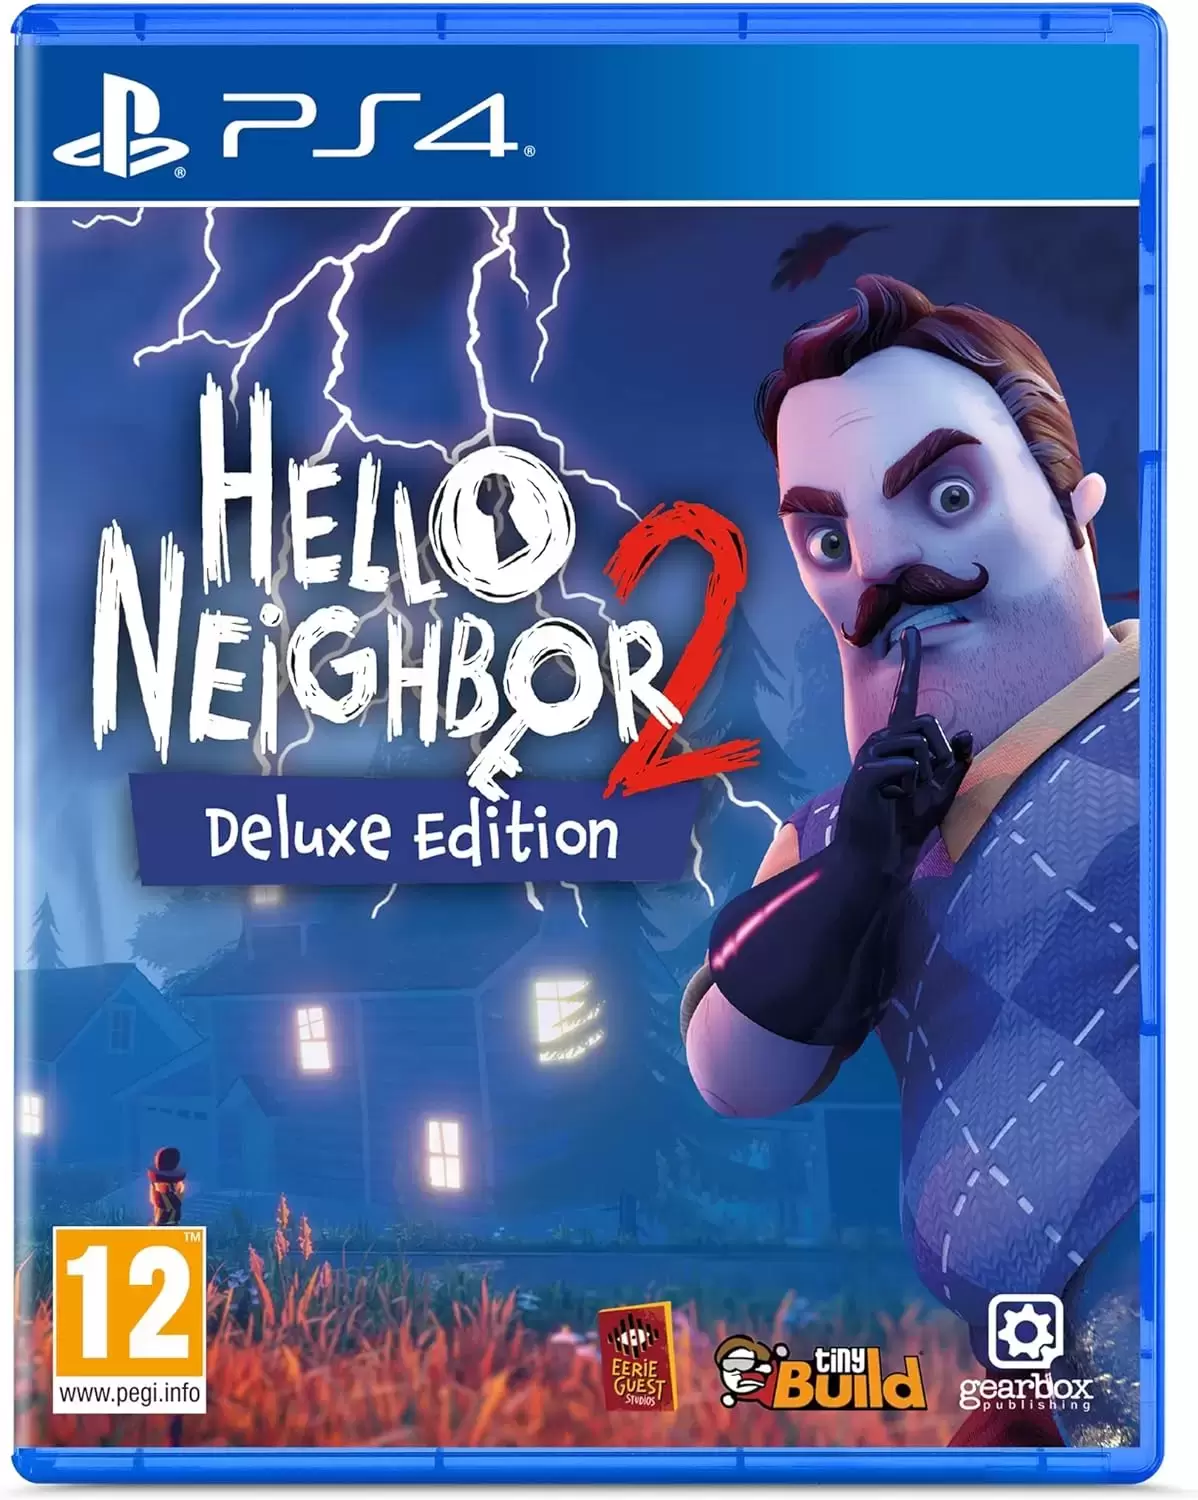 PS4 Games - Hello Neighbor 2 Deluxe Edition